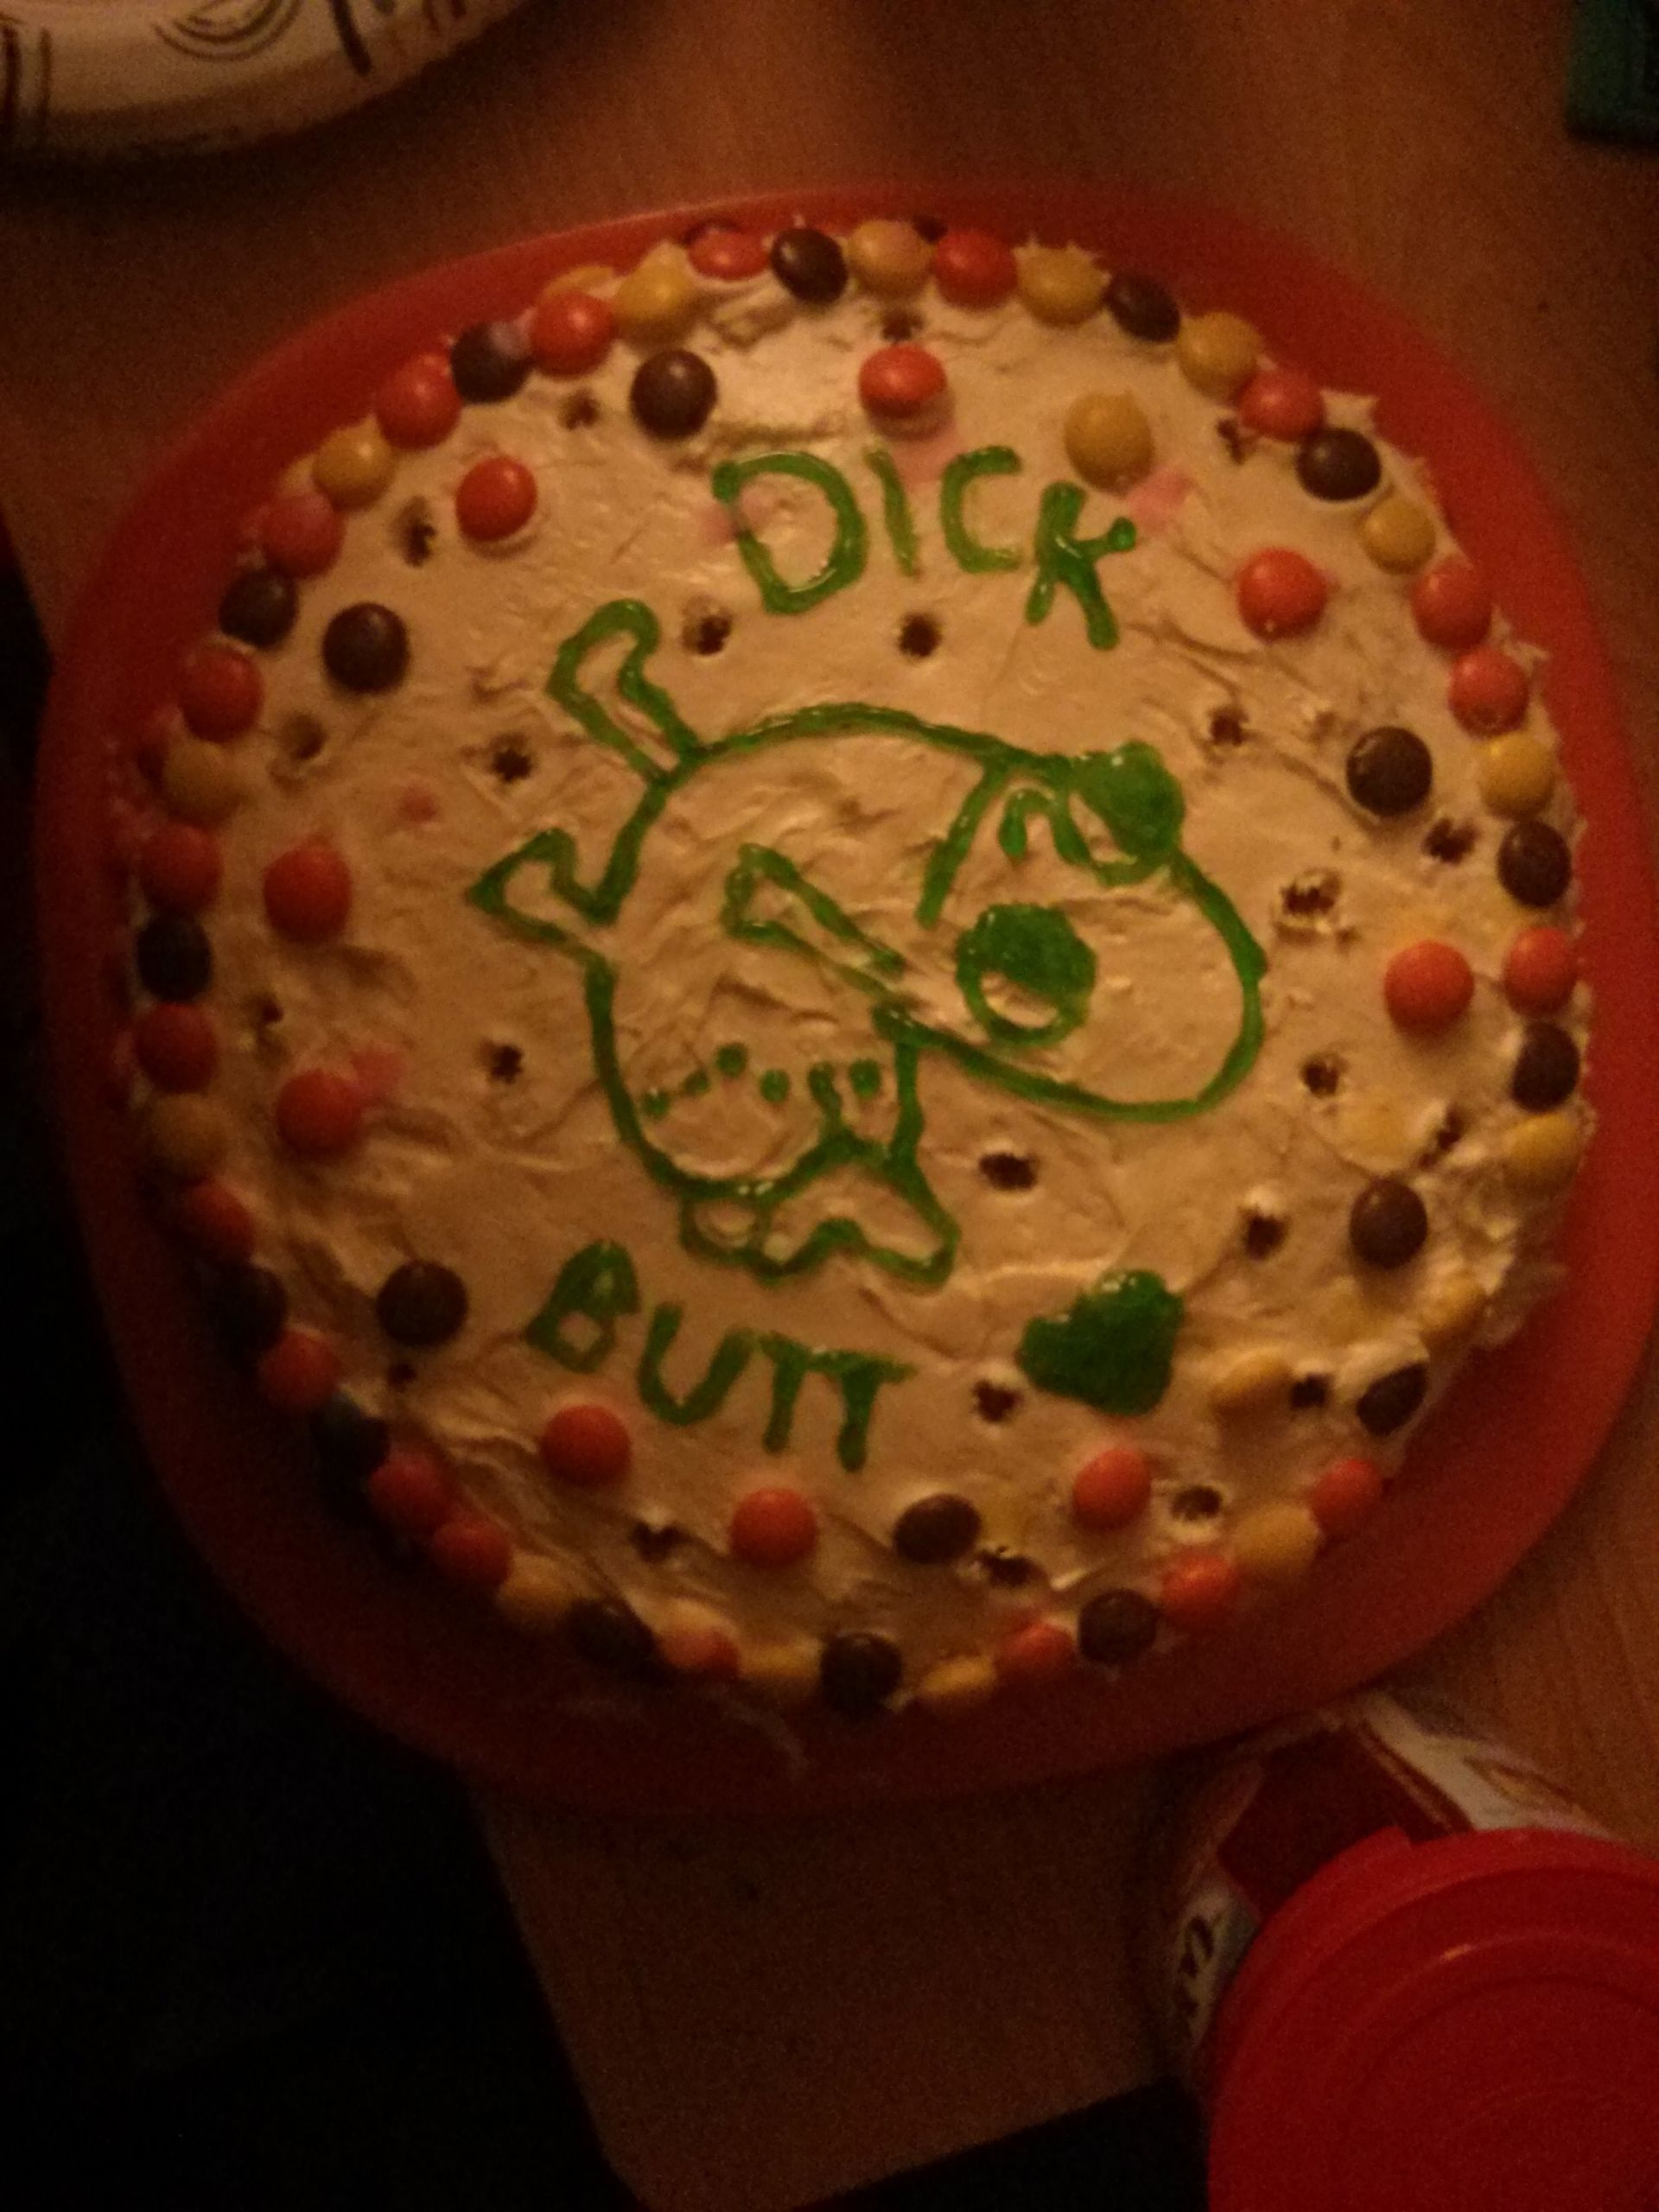 Happy Birthday Dick Cake
 DickButt